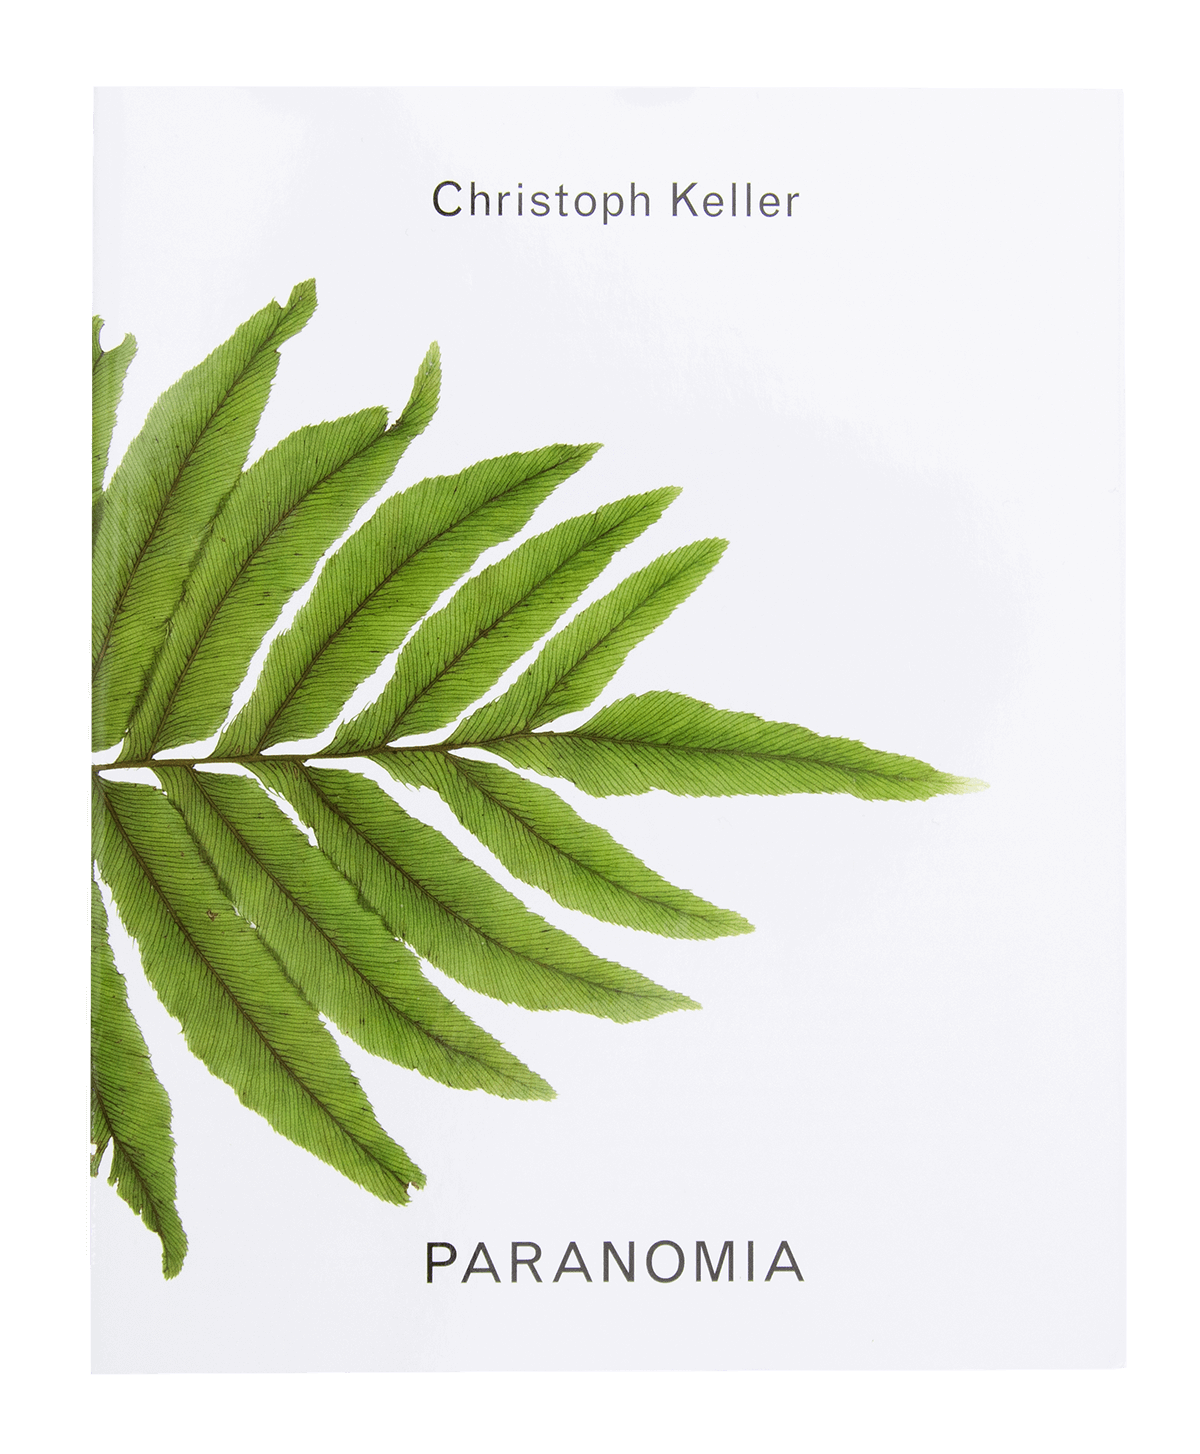 Christoph-Keller-Paranomia-cover-1